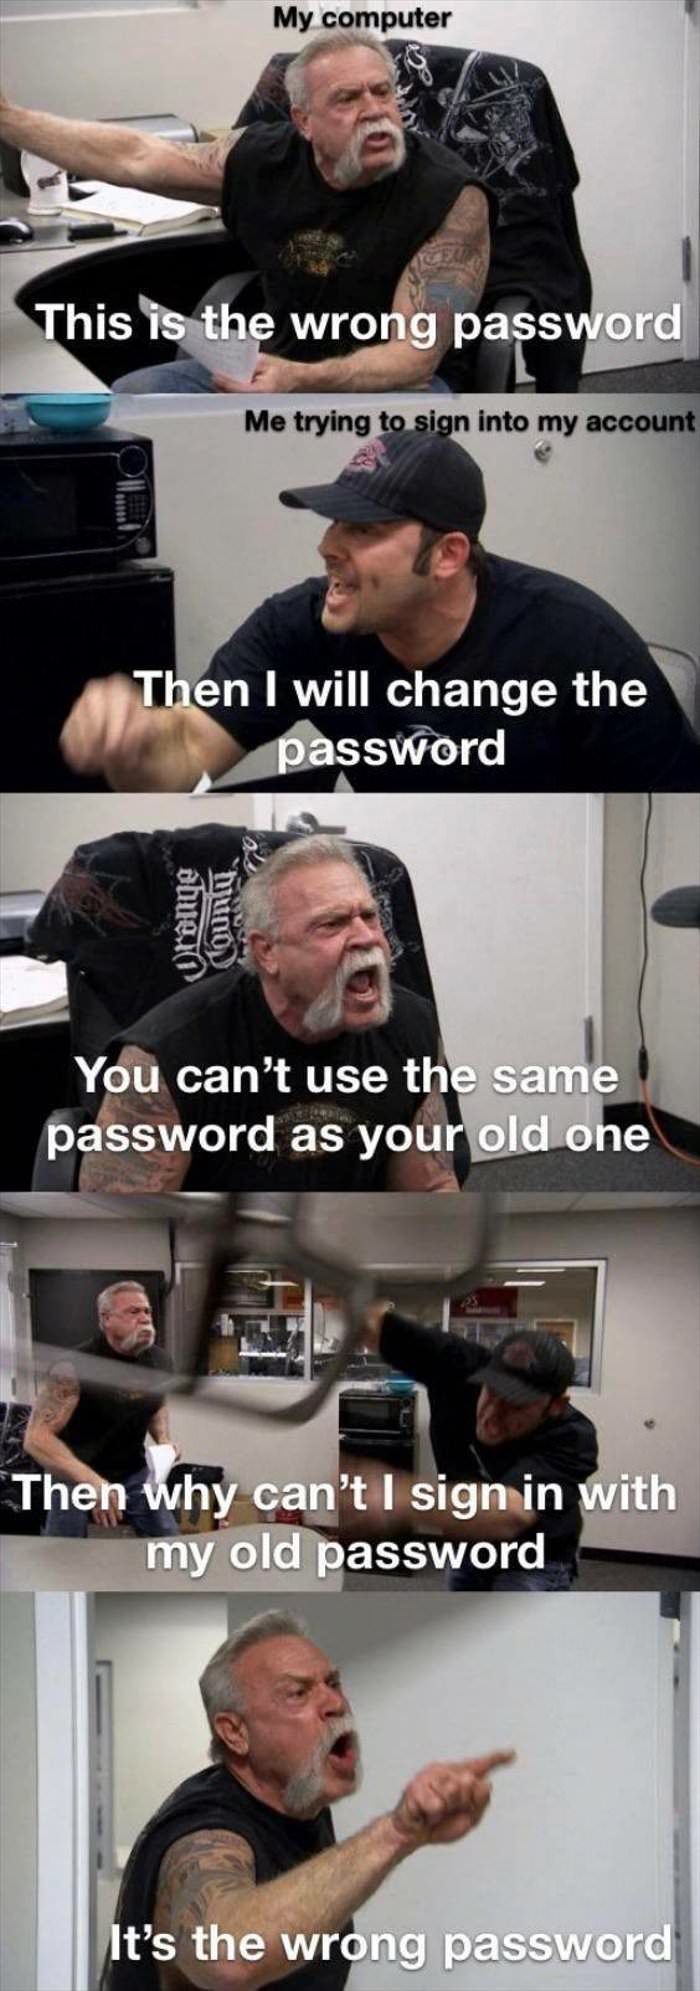 your password ... 2